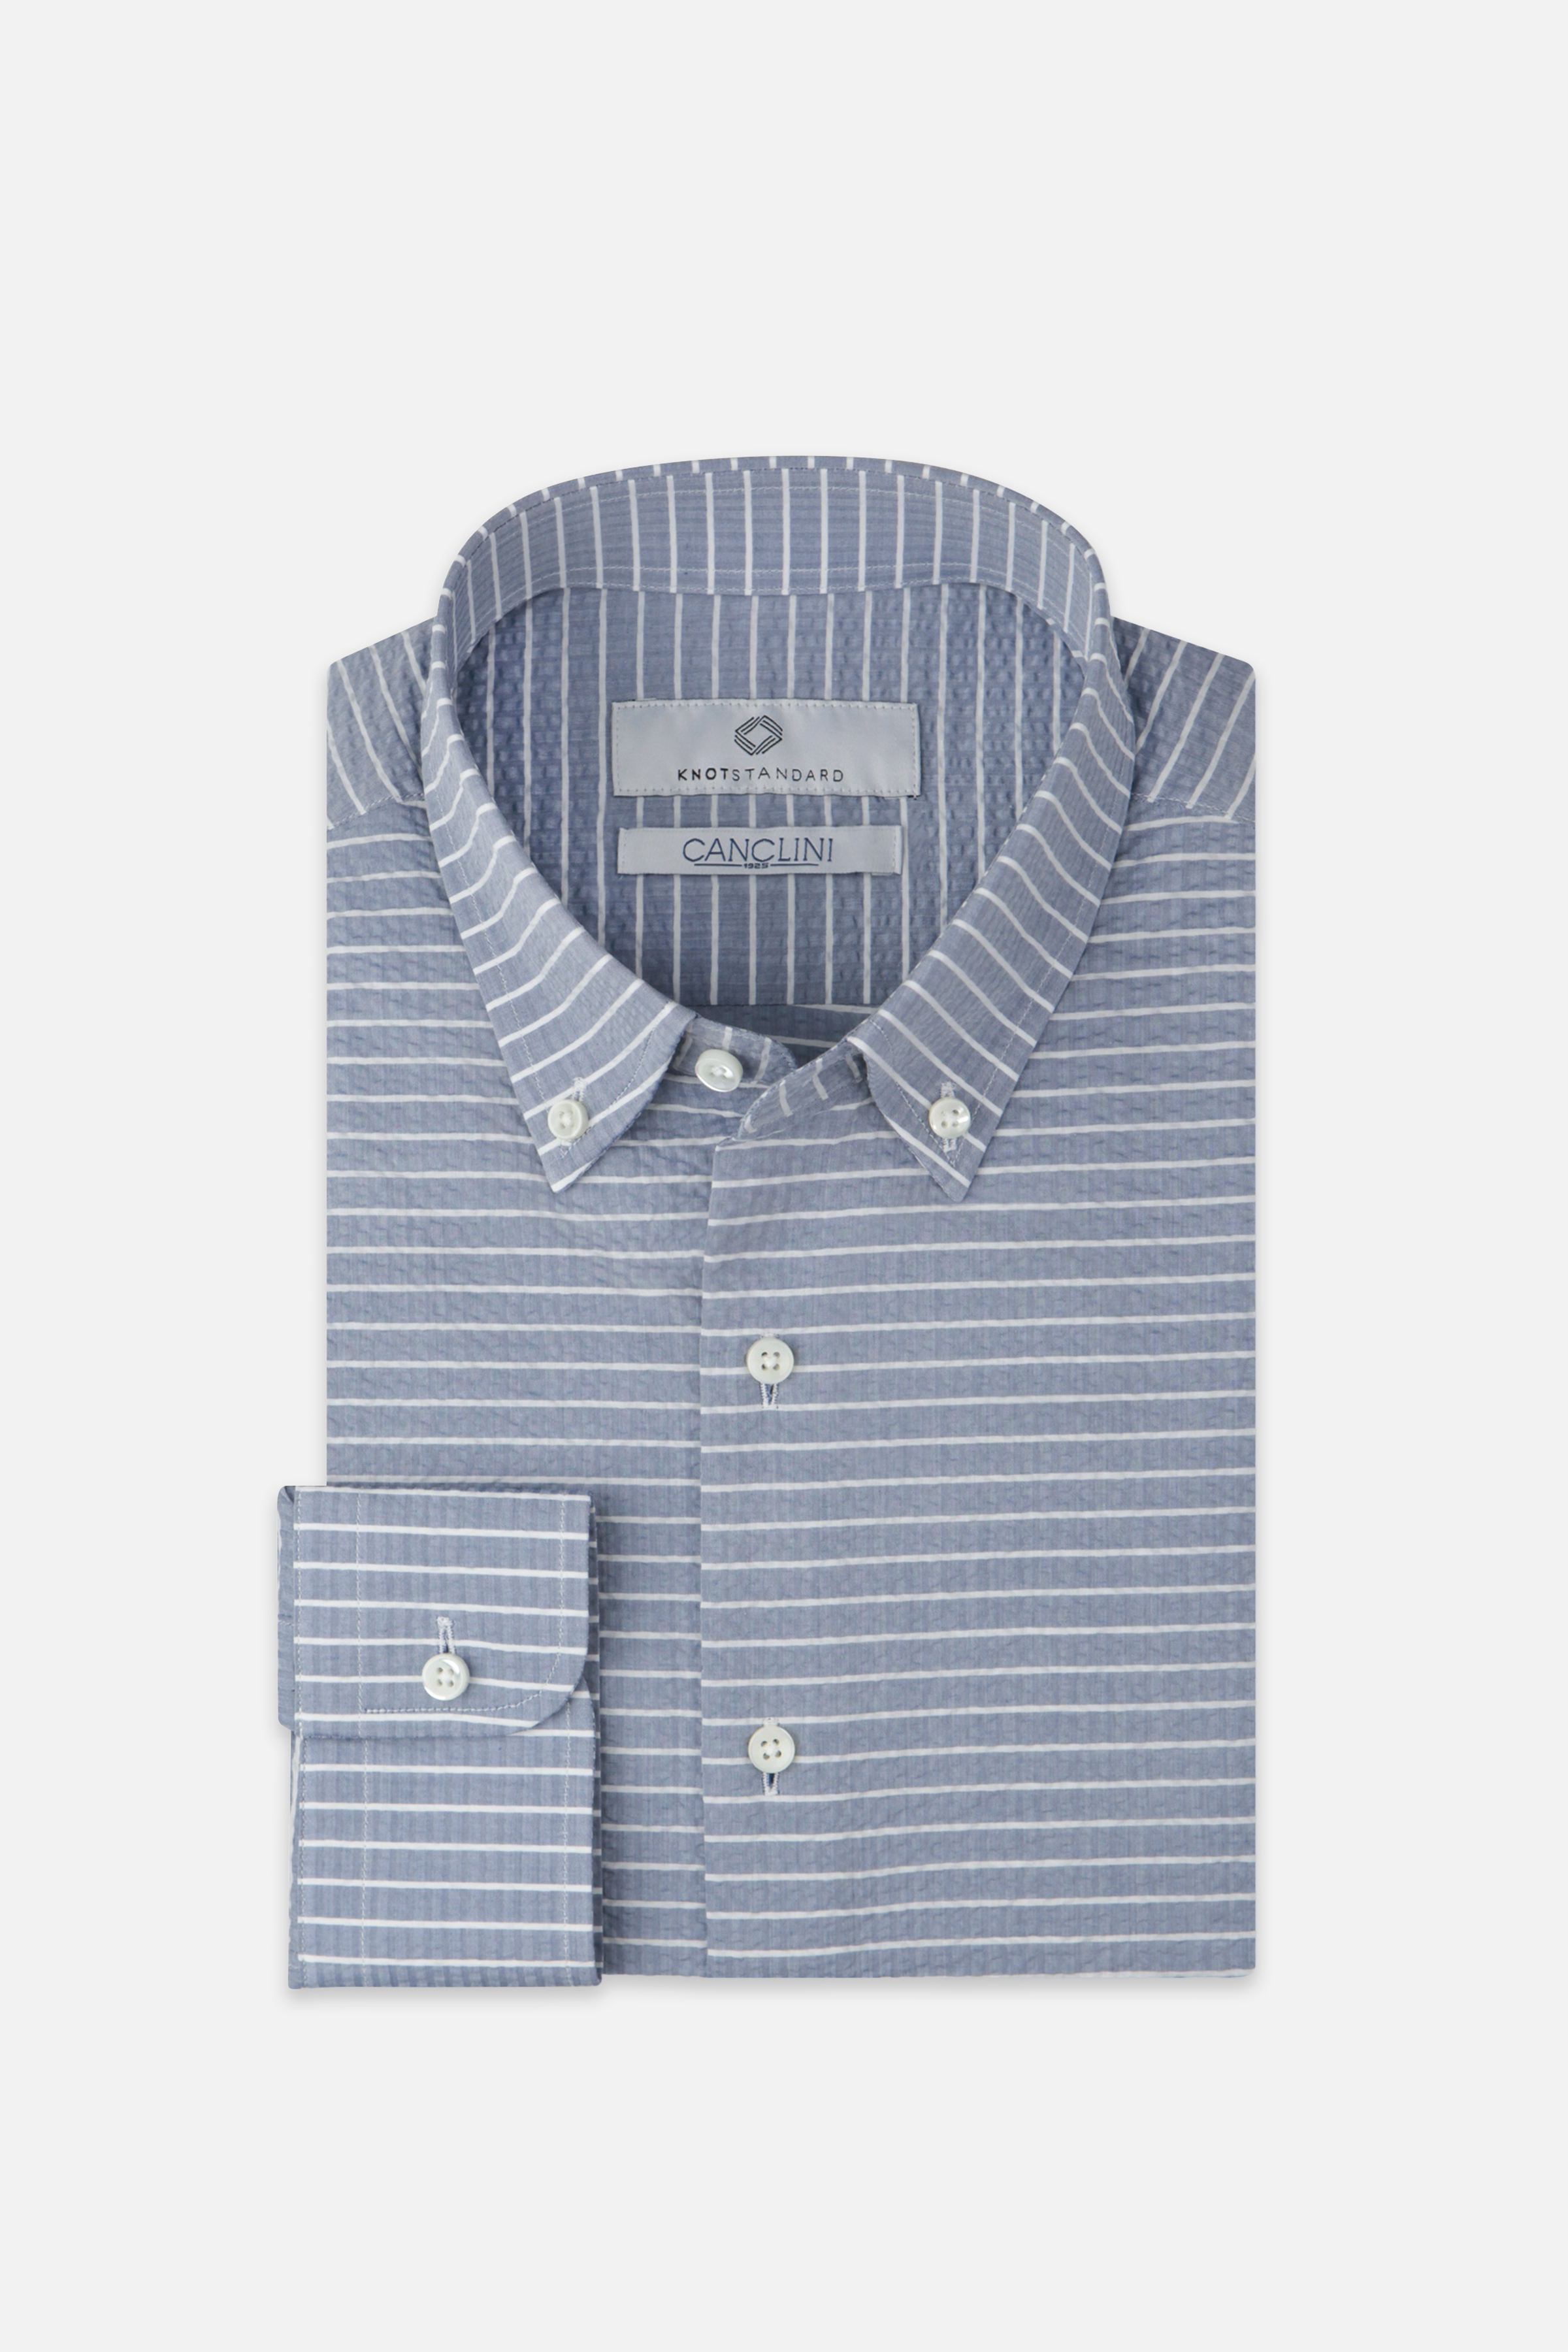 Canclini Seersucker Horizontal Striped Shirt by Knot Standard